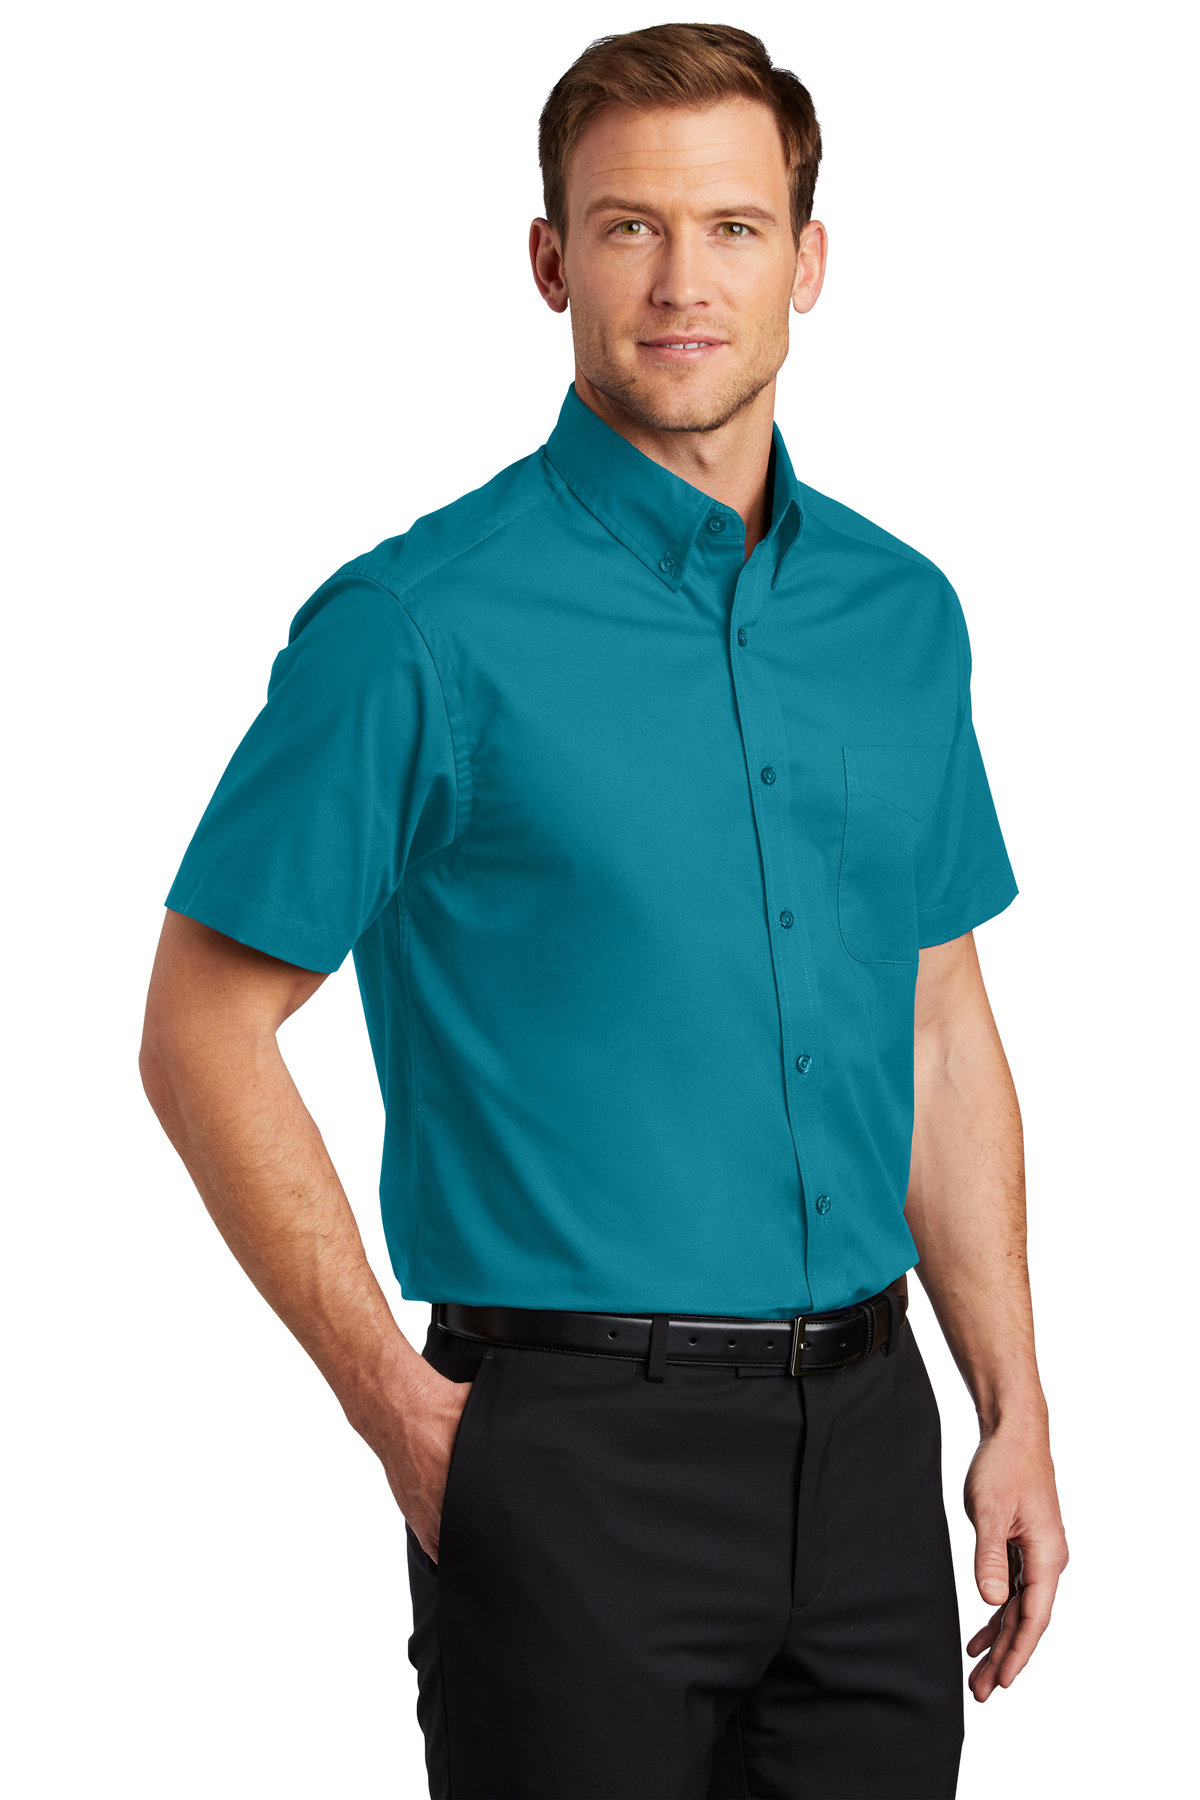 Port Authority Tall Short Sleeve Easy Care Shirt | Product | SanMar